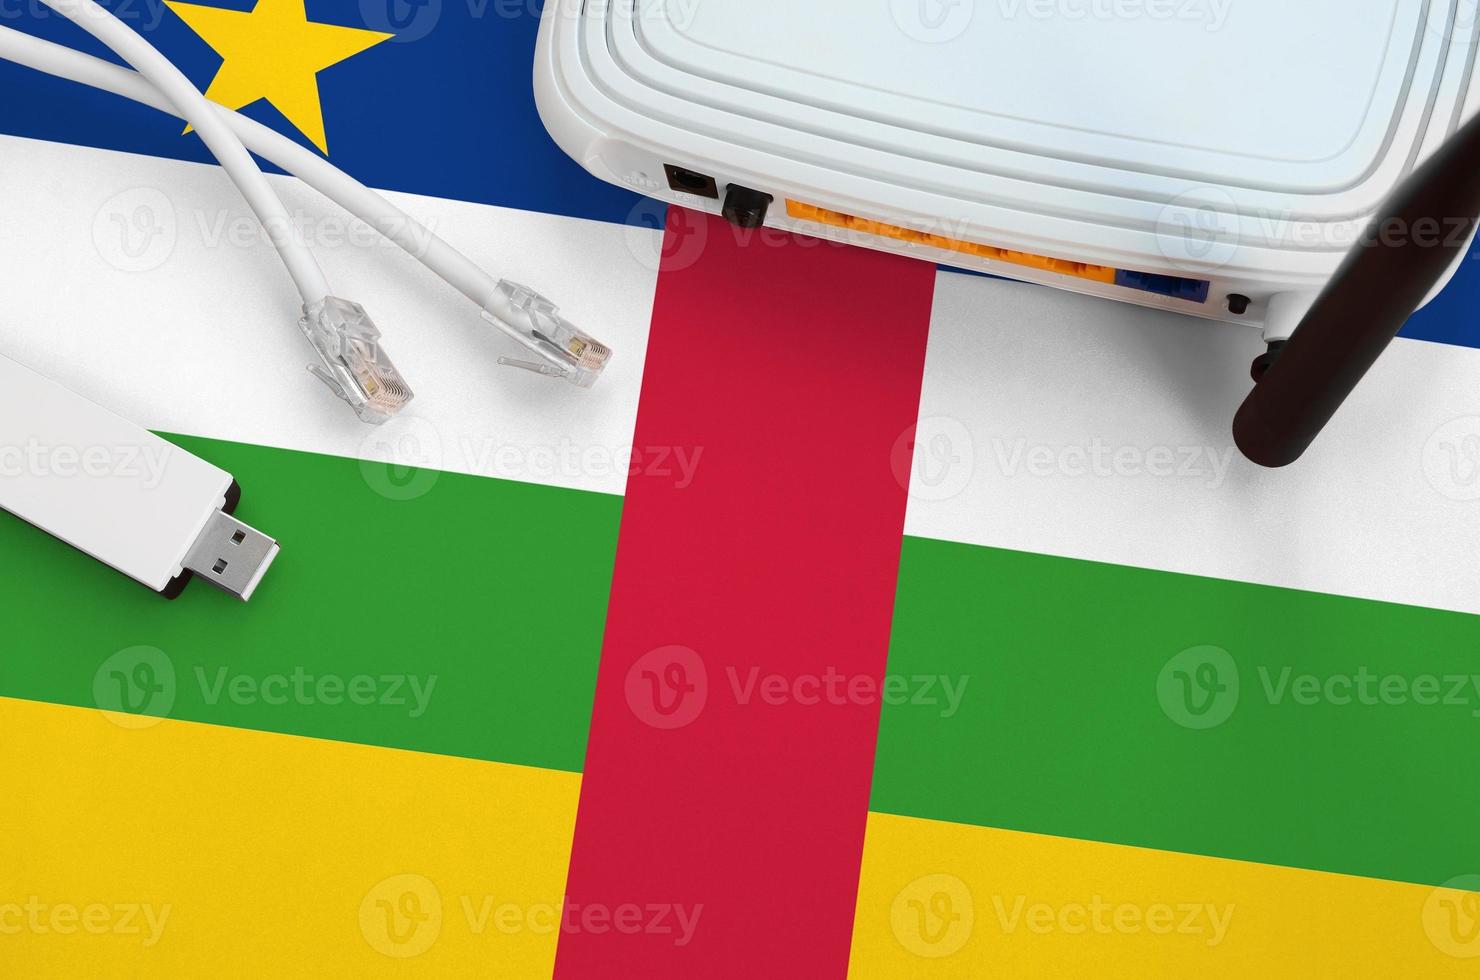 centraal Afrikaanse republiek vlag afgebeeld Aan tafel met internet rj45 kabel, draadloze USB Wifi adapter en router. internet verbinding concept foto